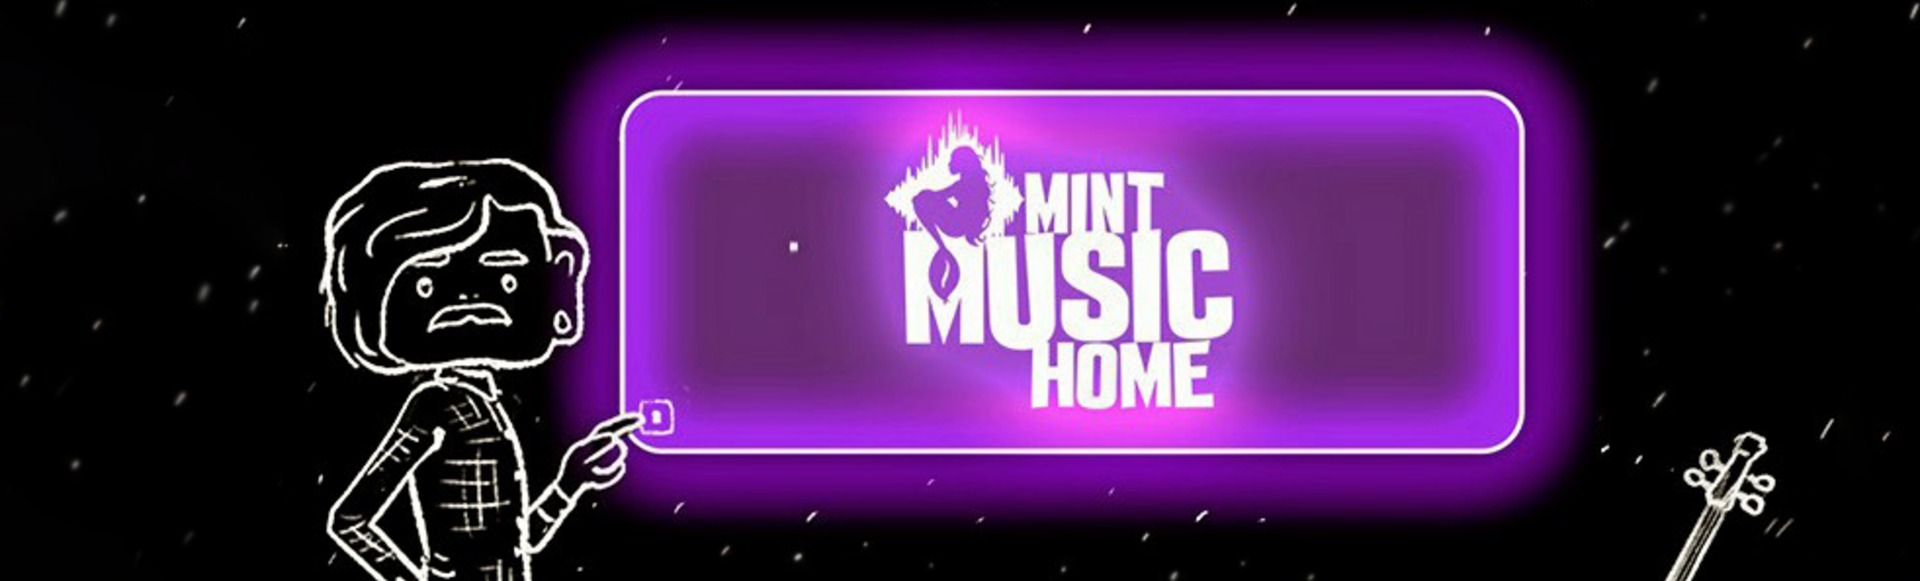 Mint Music Home Live